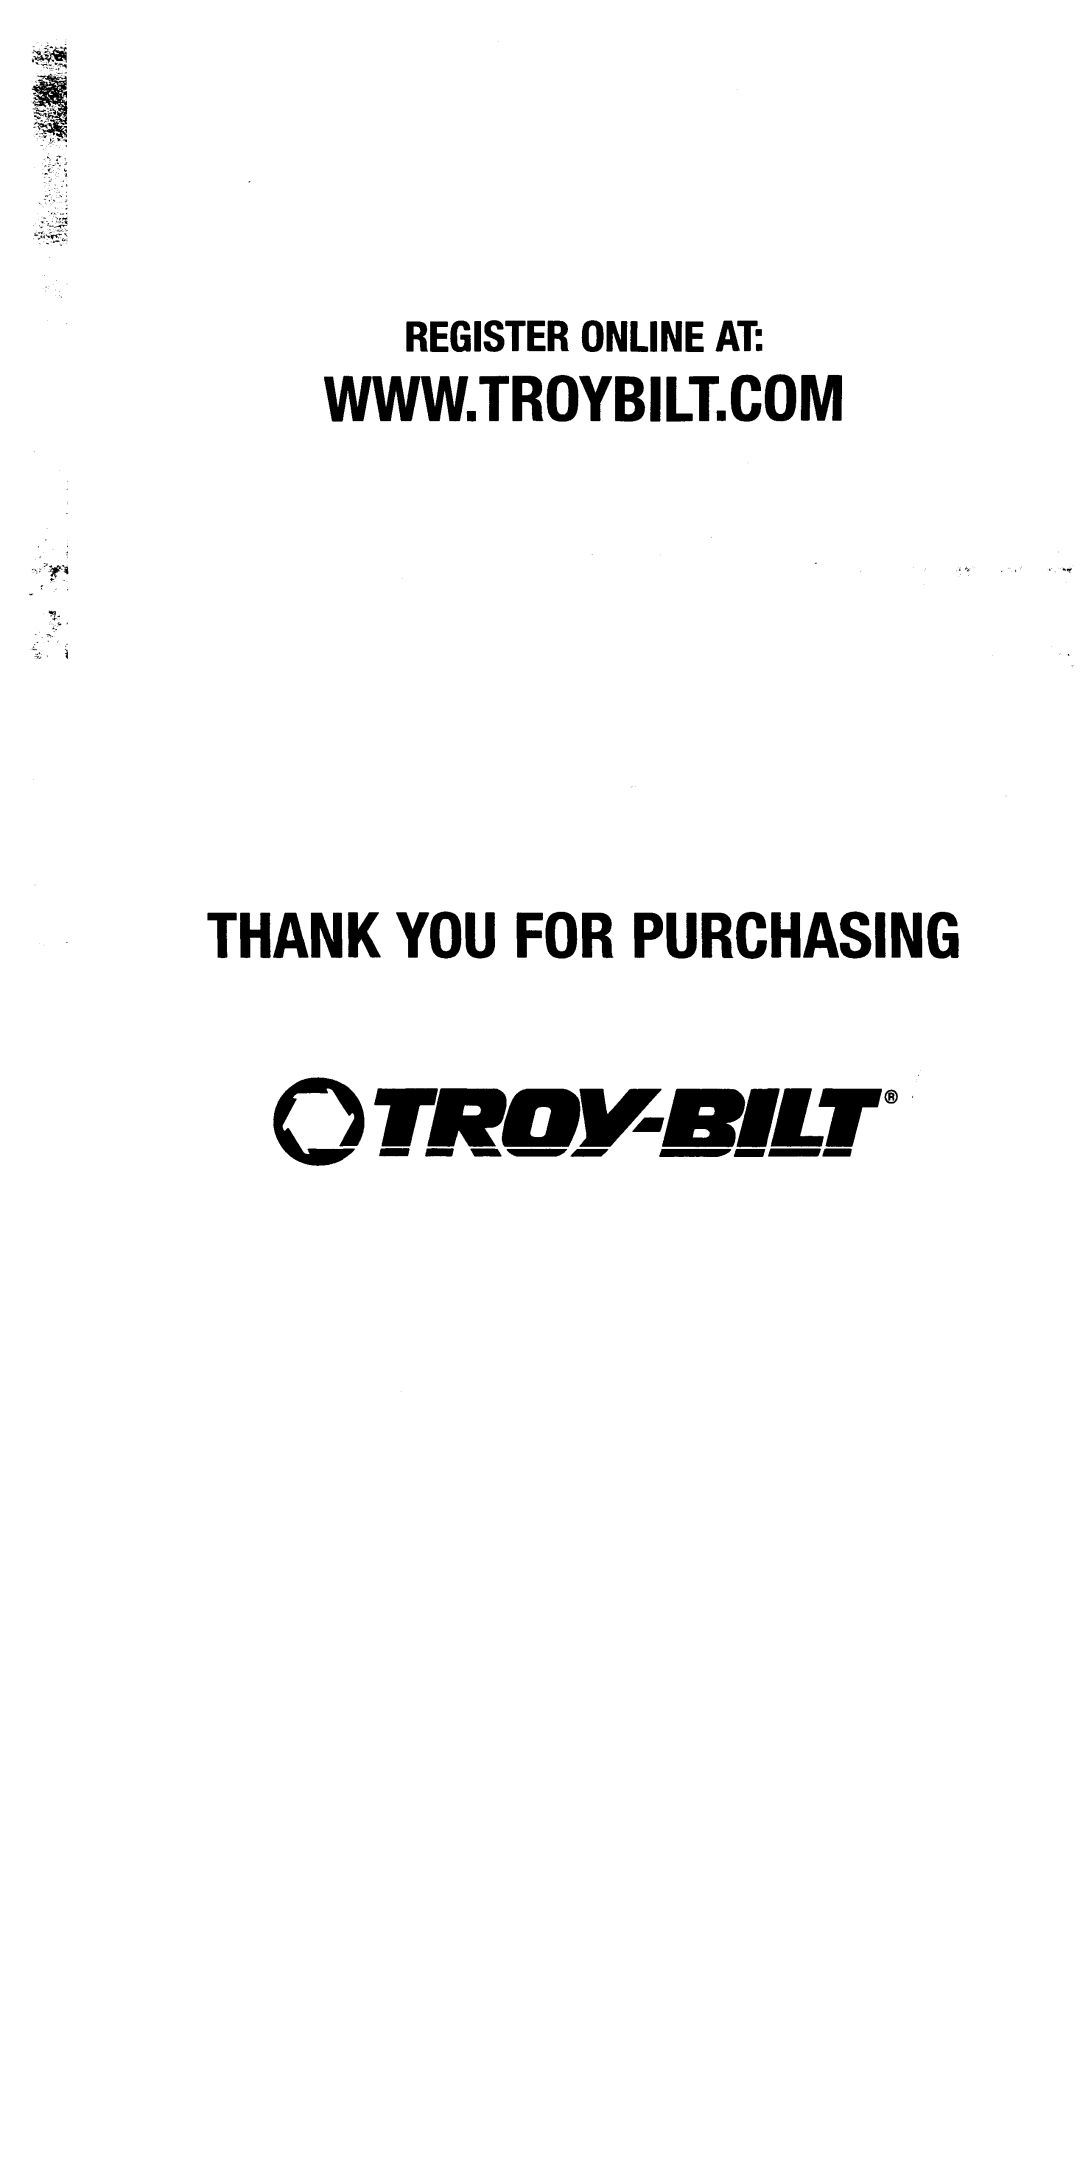 Troy-Bilt 592 manual 